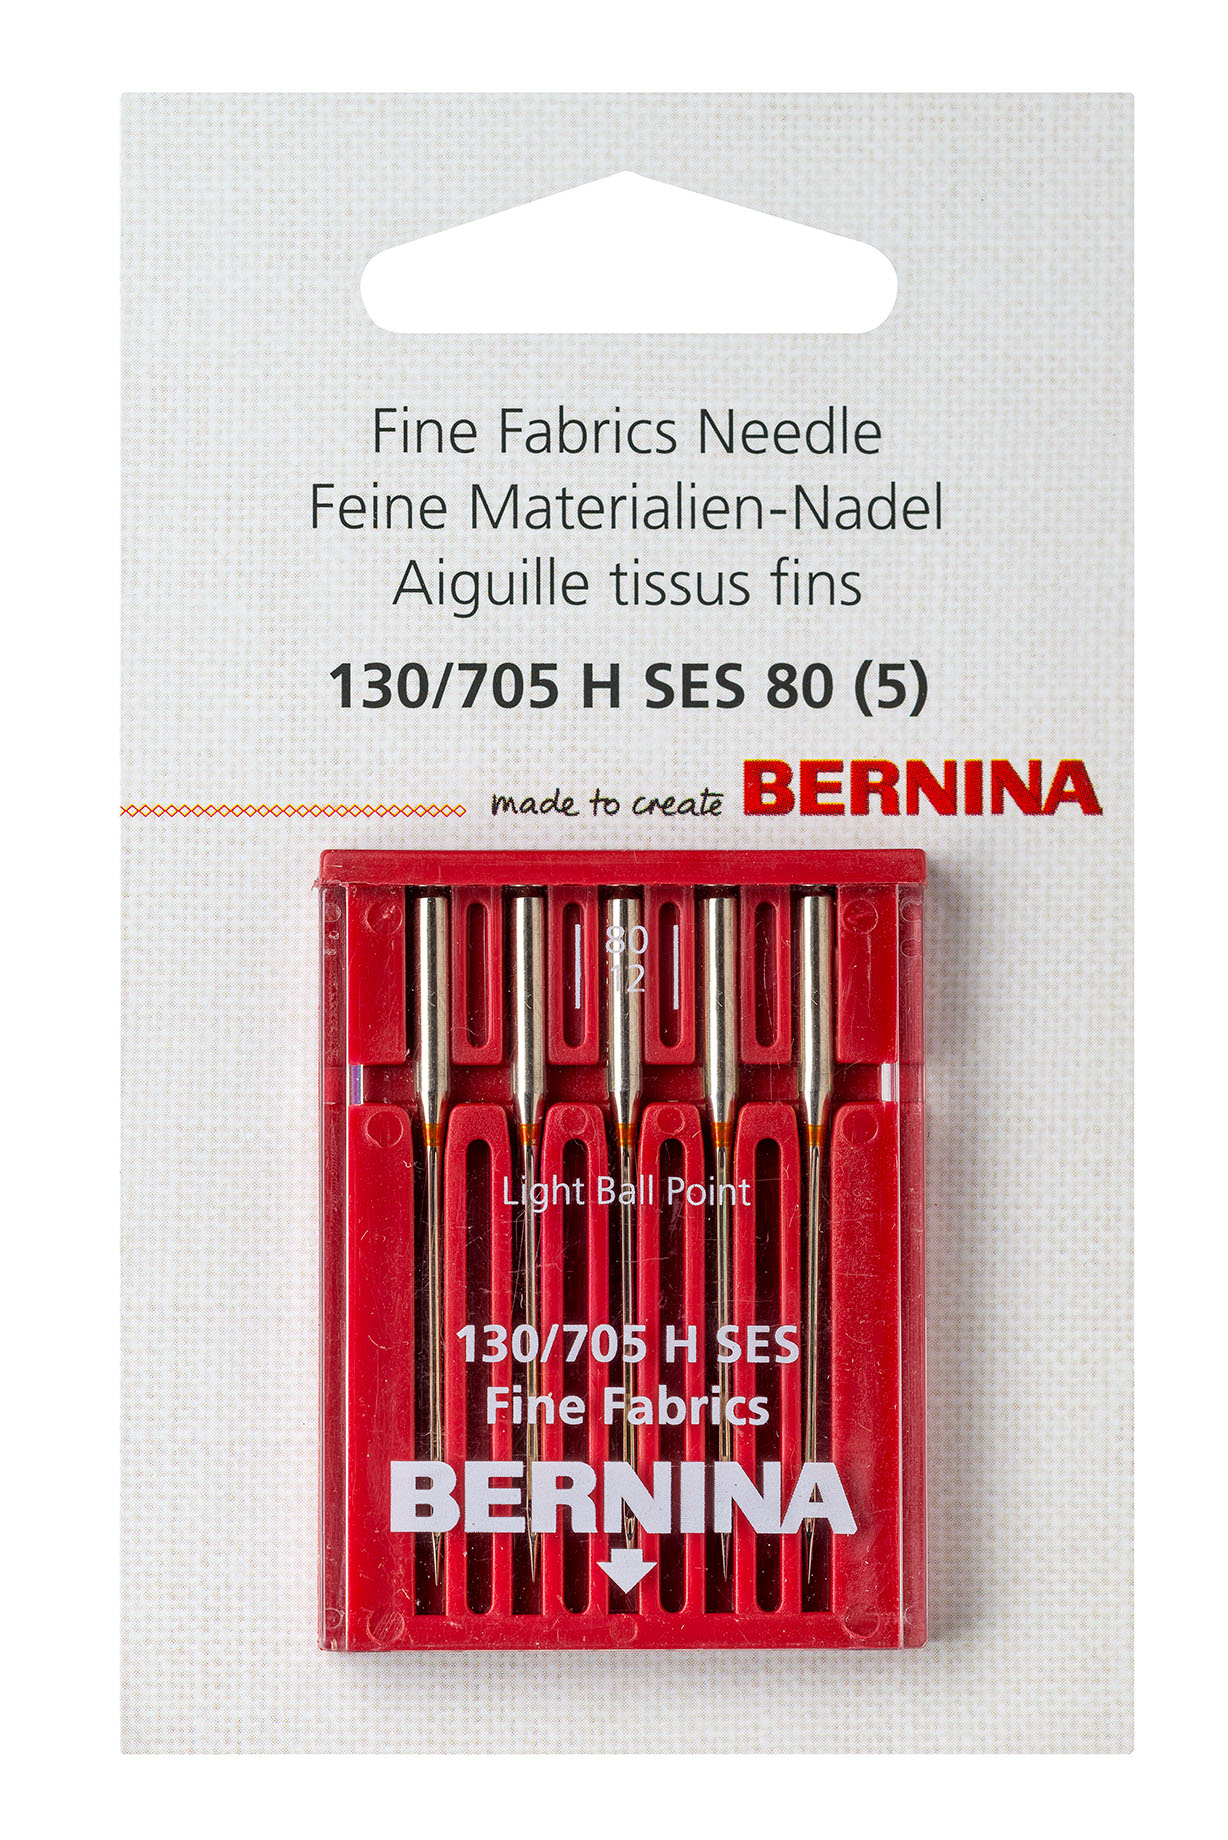 Fine fabrics needle